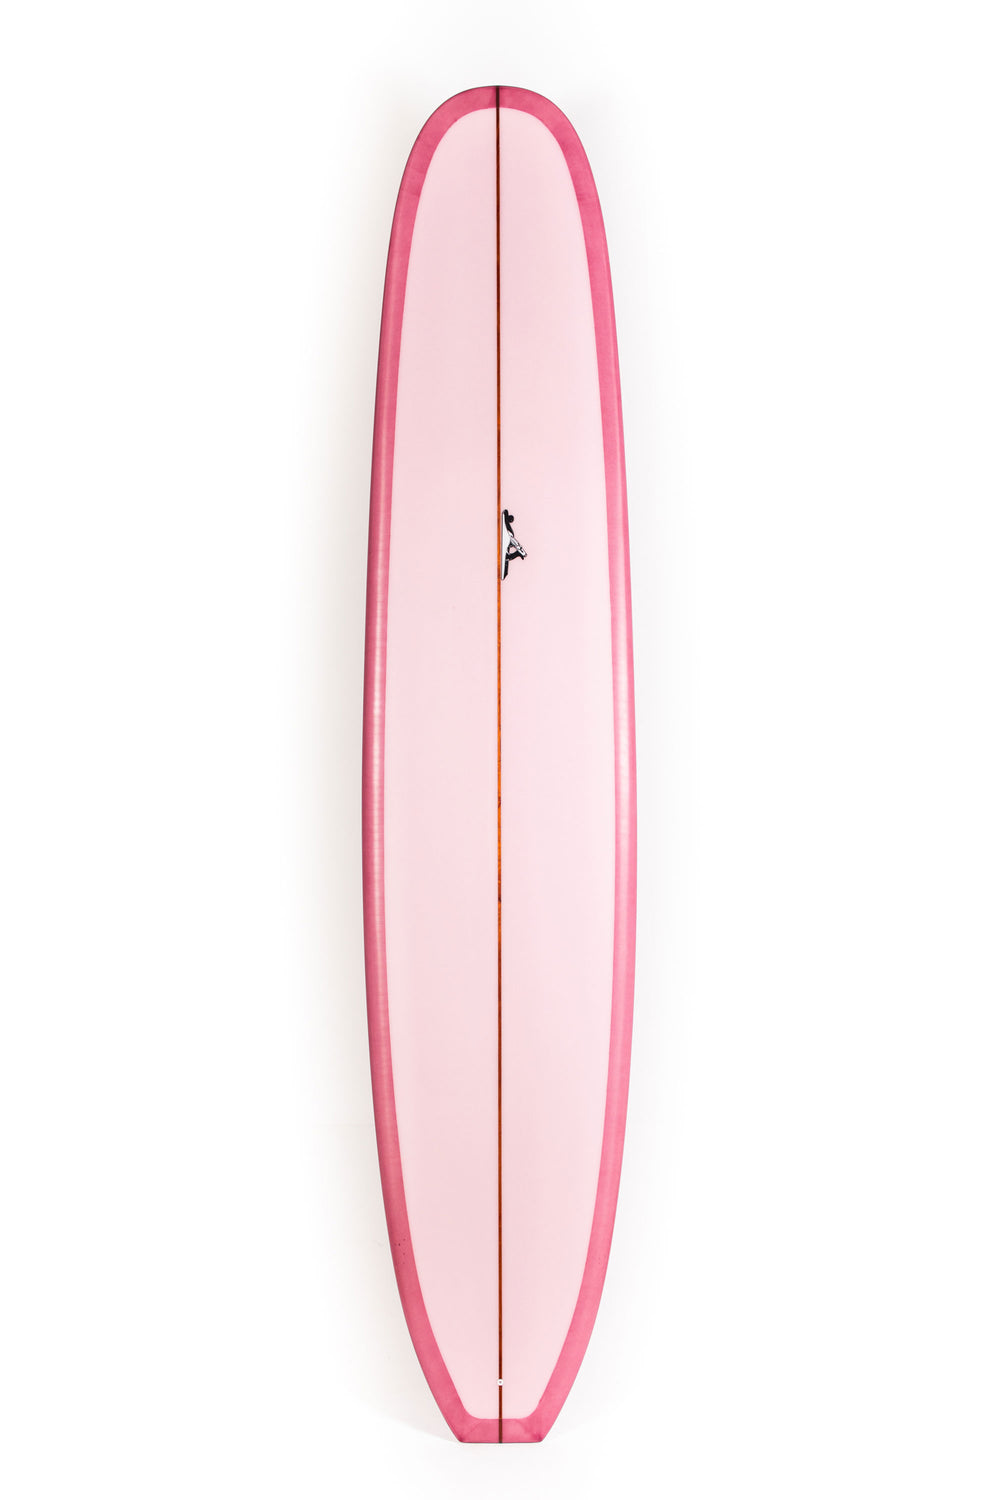 Pukas Surf Shop - Thomas Surfboards - STEP DECK - 9'4